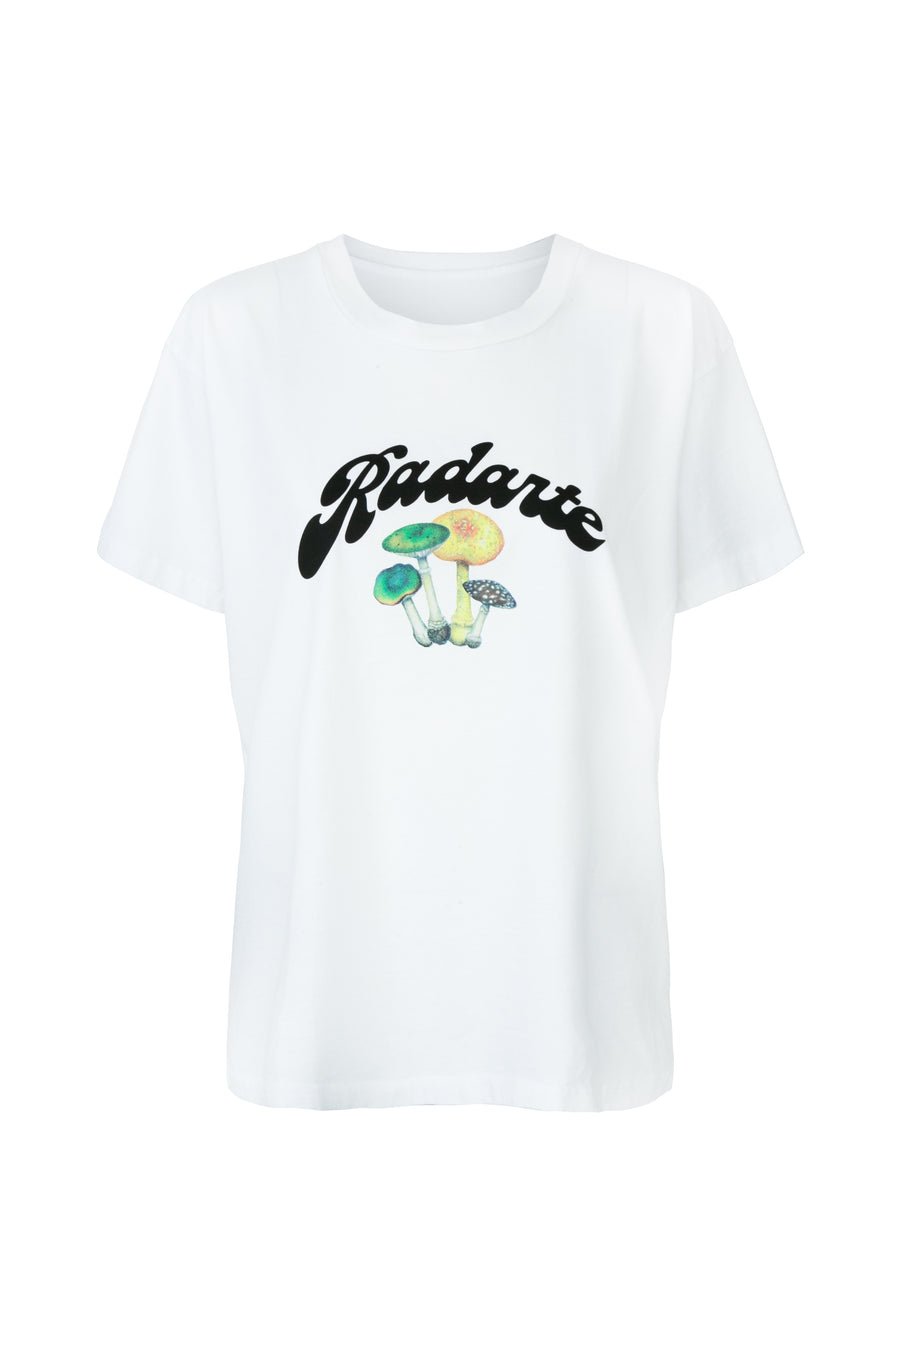 Mushroom Print Radarte T-Shirt